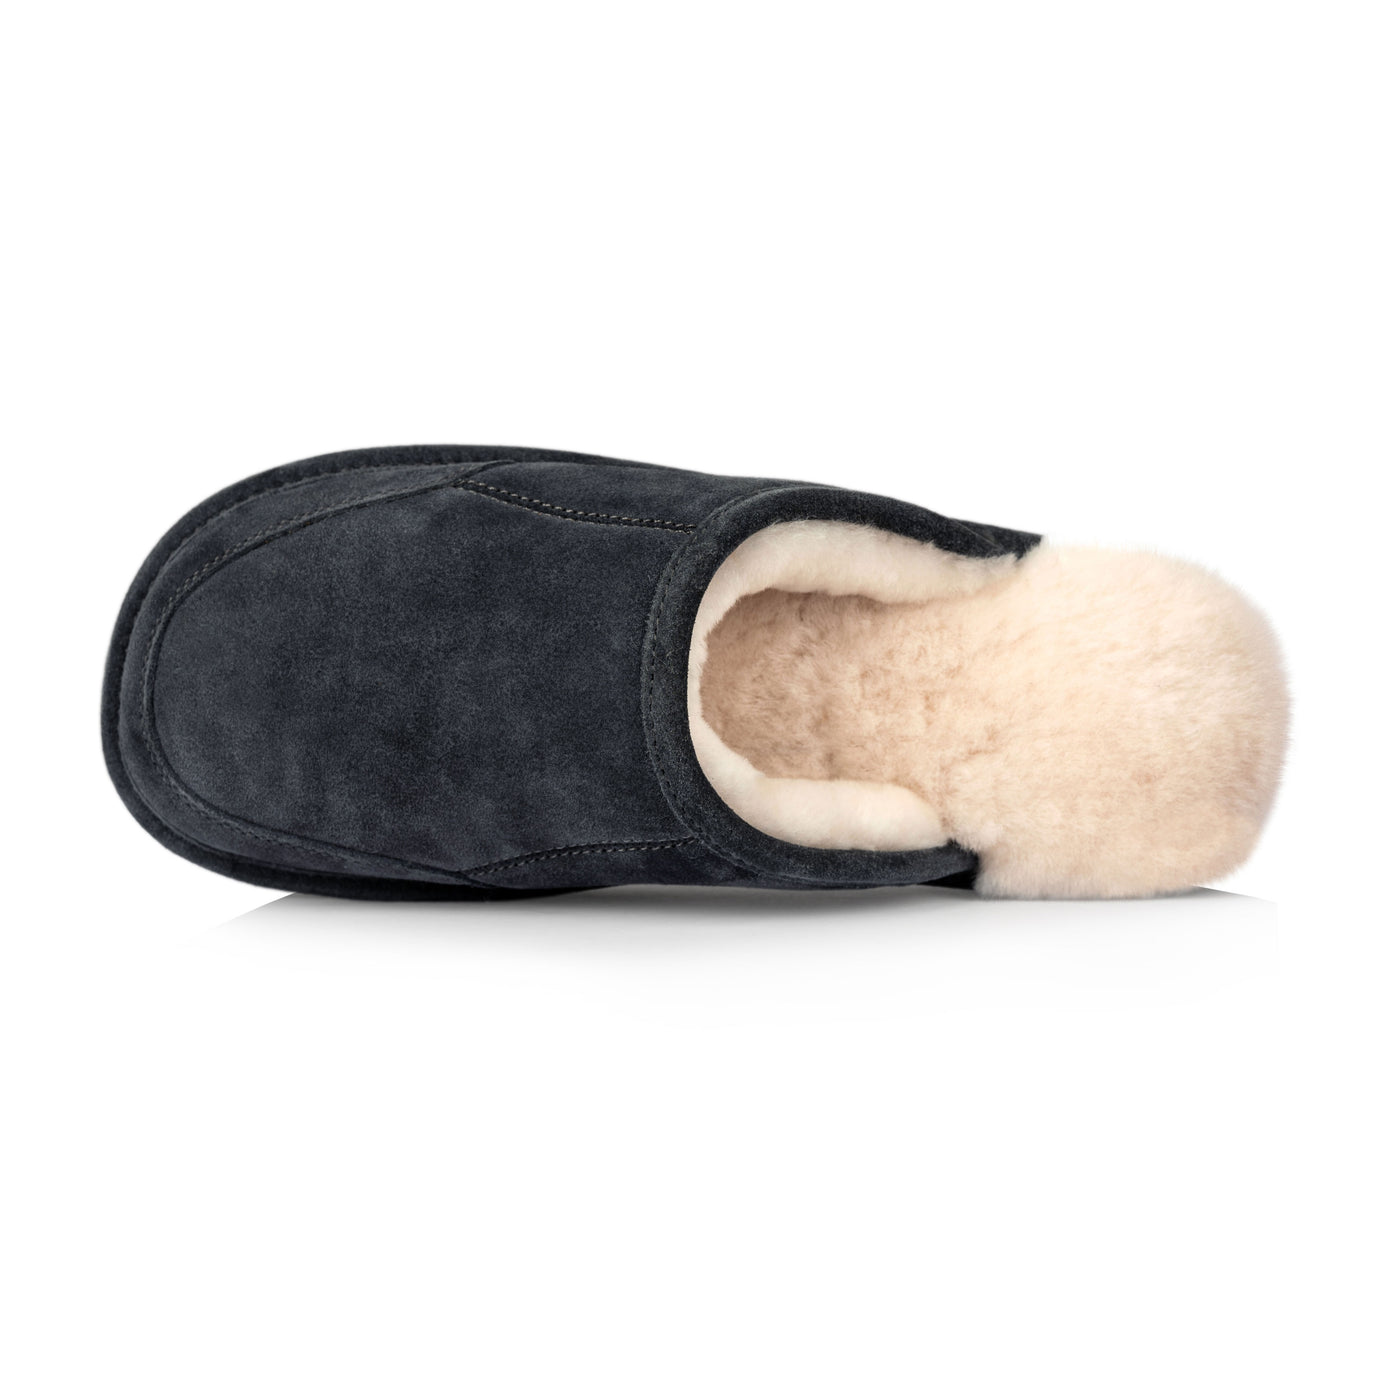 Brandon men's slipper (Grey)